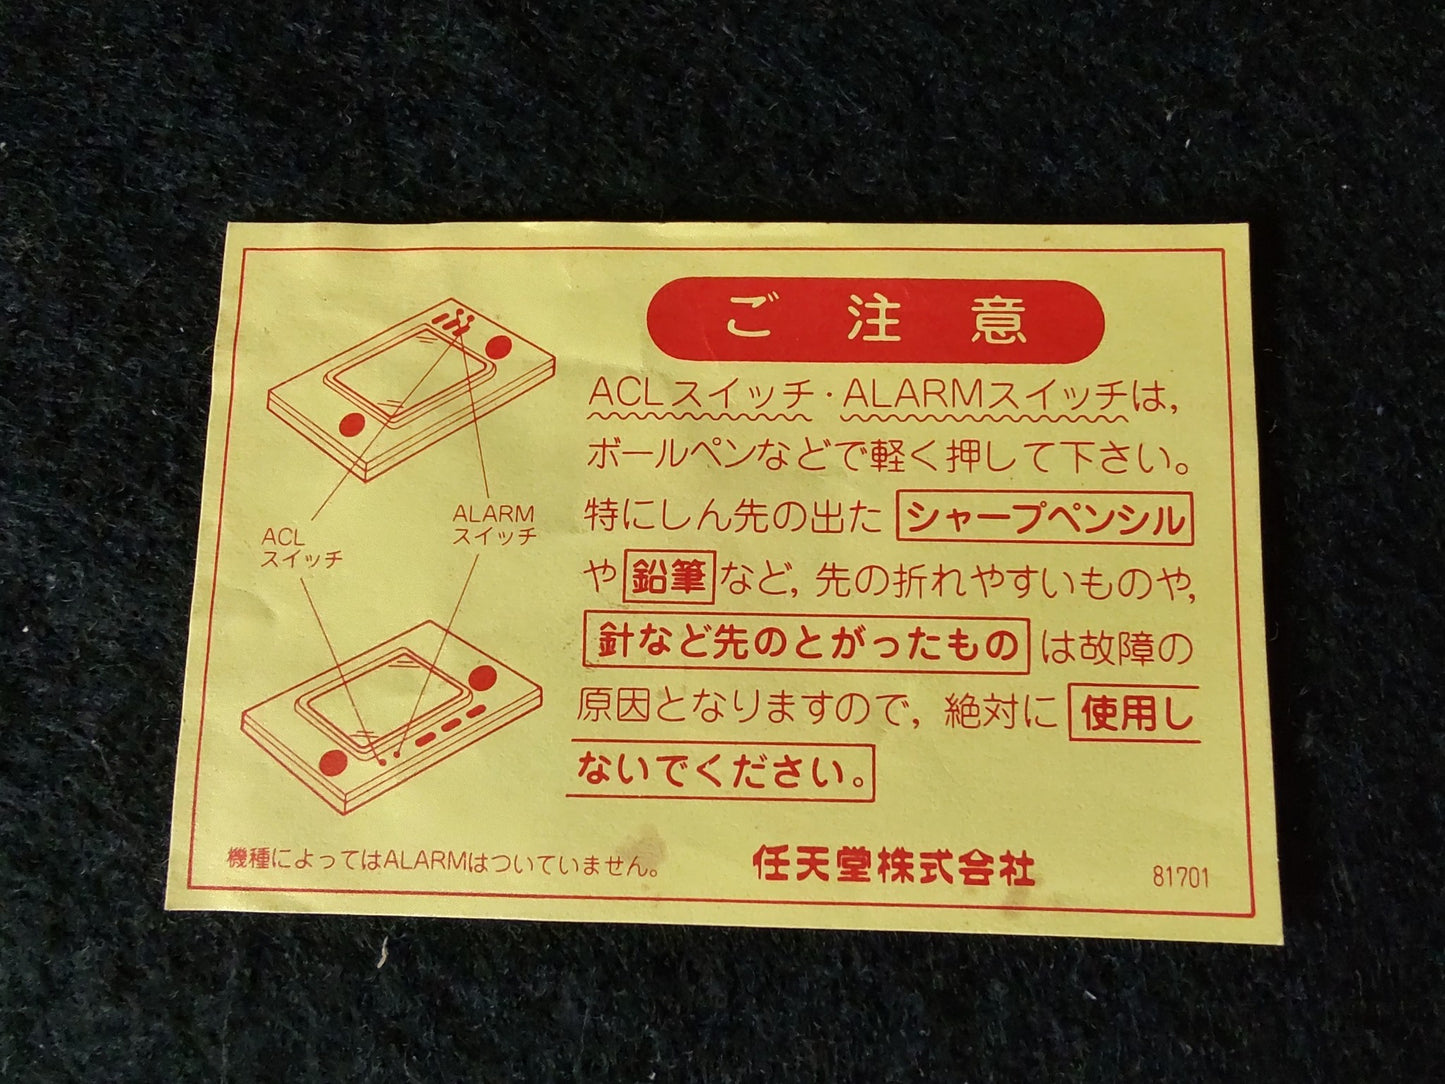 Vintage Nintendo Game & Watch Manhole (utility hole) console, Working-f0810-